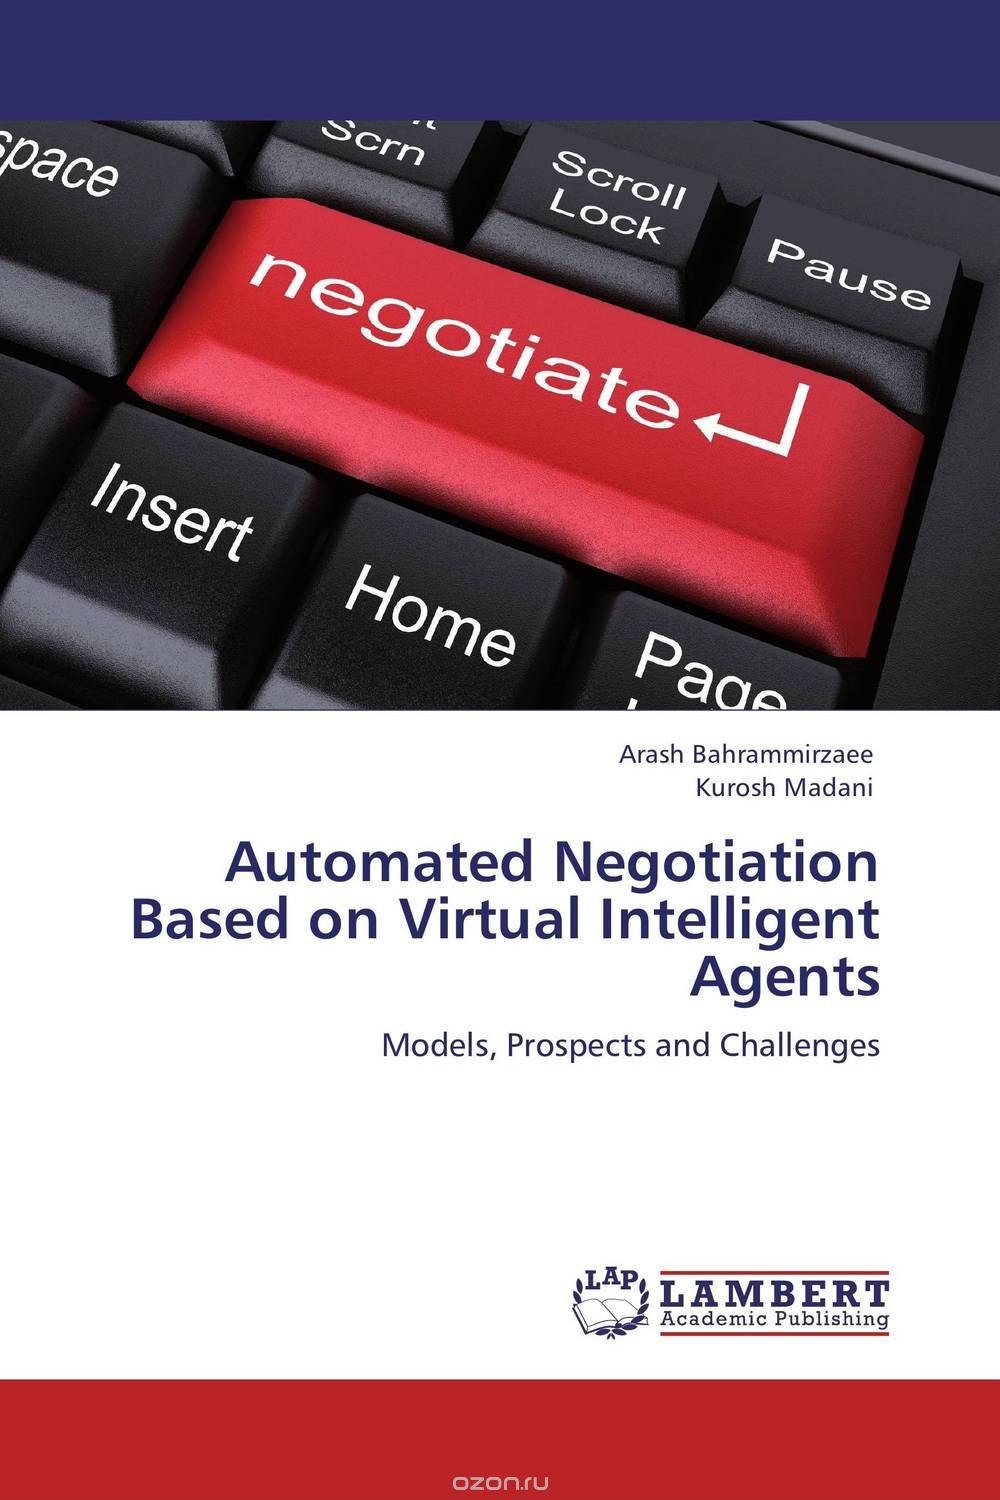 Скачать книгу "Automated Negotiation Based on Virtual Intelligent Agents"